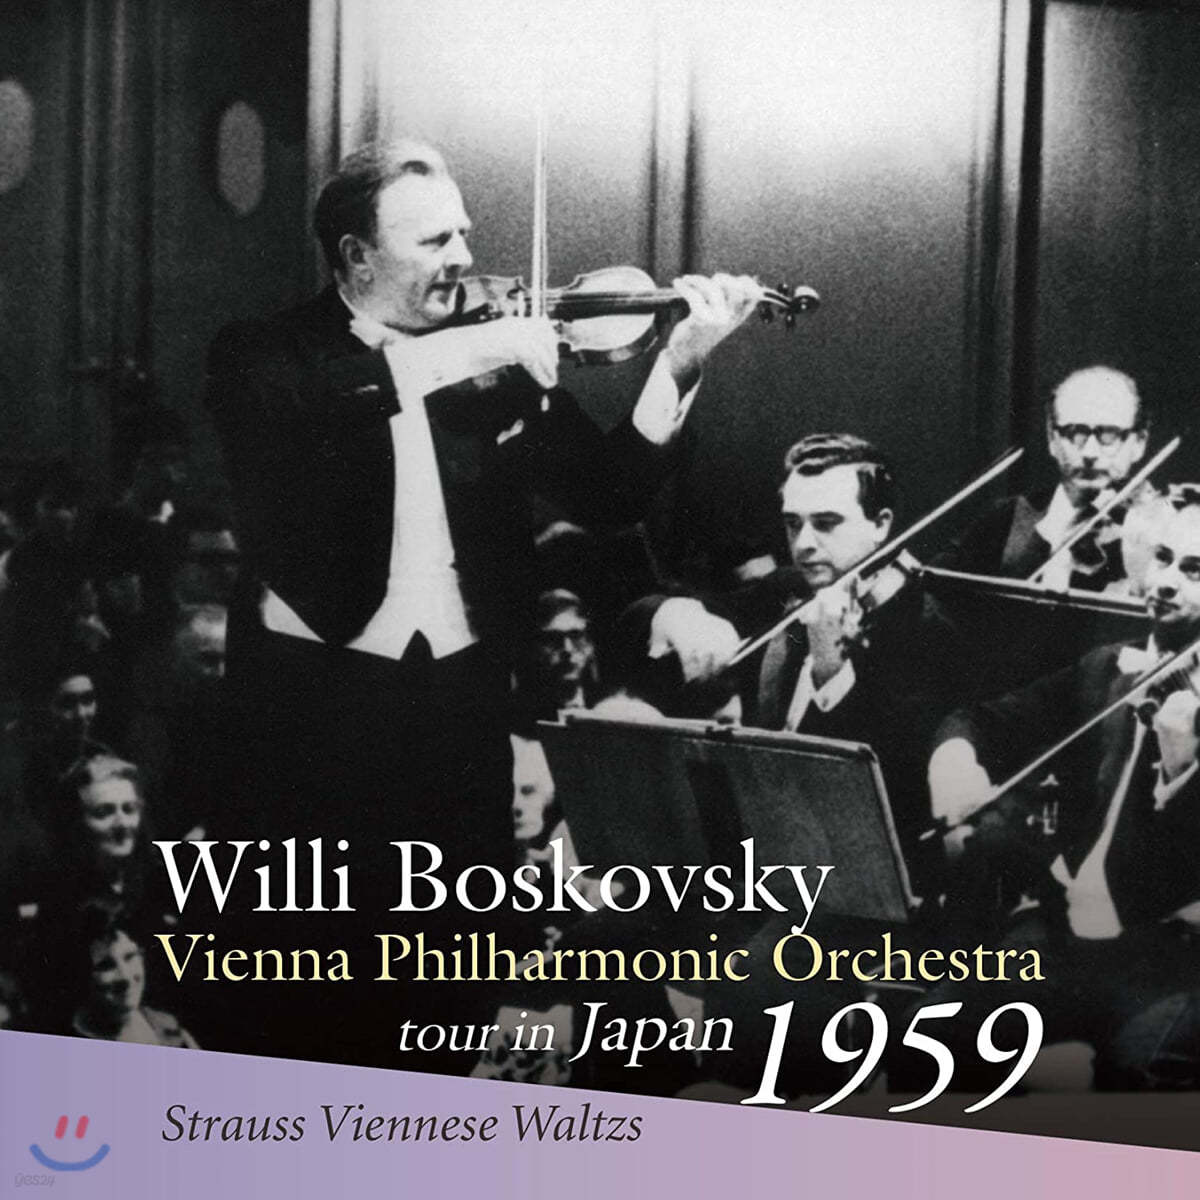 Willi Boskovsky 슈트라우스: 왈츠와 폴카 (Strauss: Viennese Waltzs)